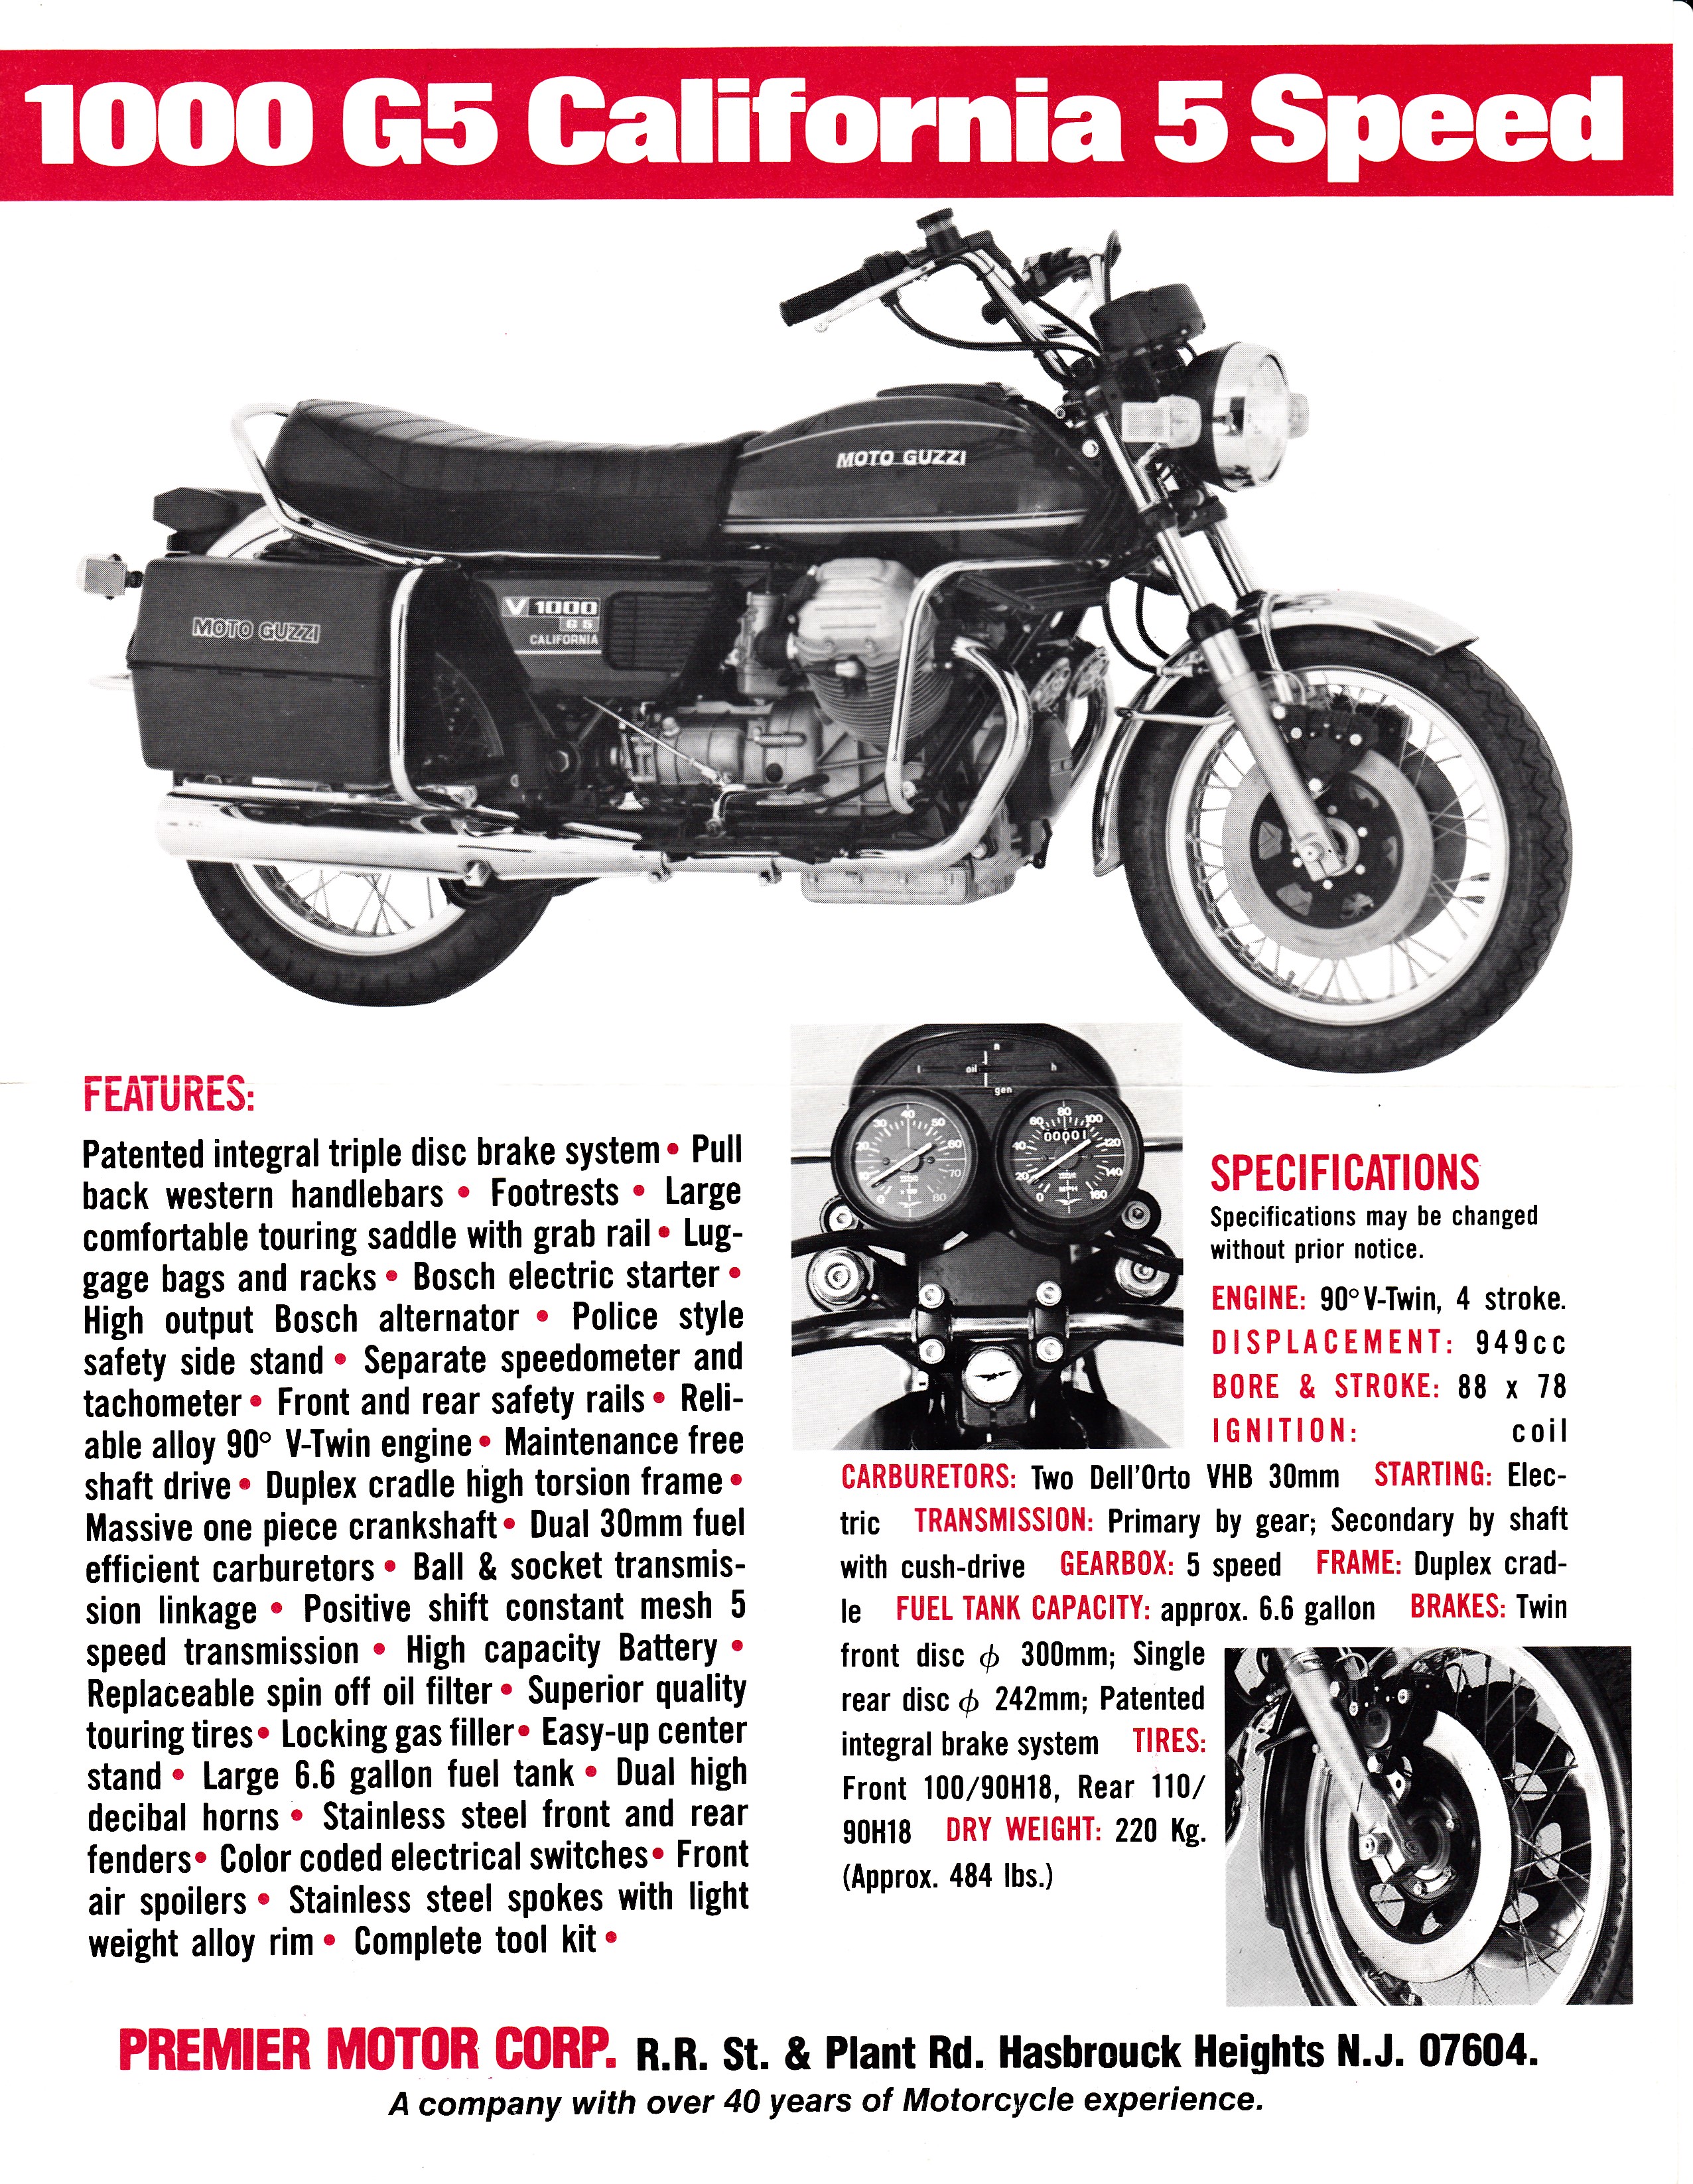 Moto Guzzi 1000 G5 California 5 Speed Motorcycle Brochure Specifications L9559 